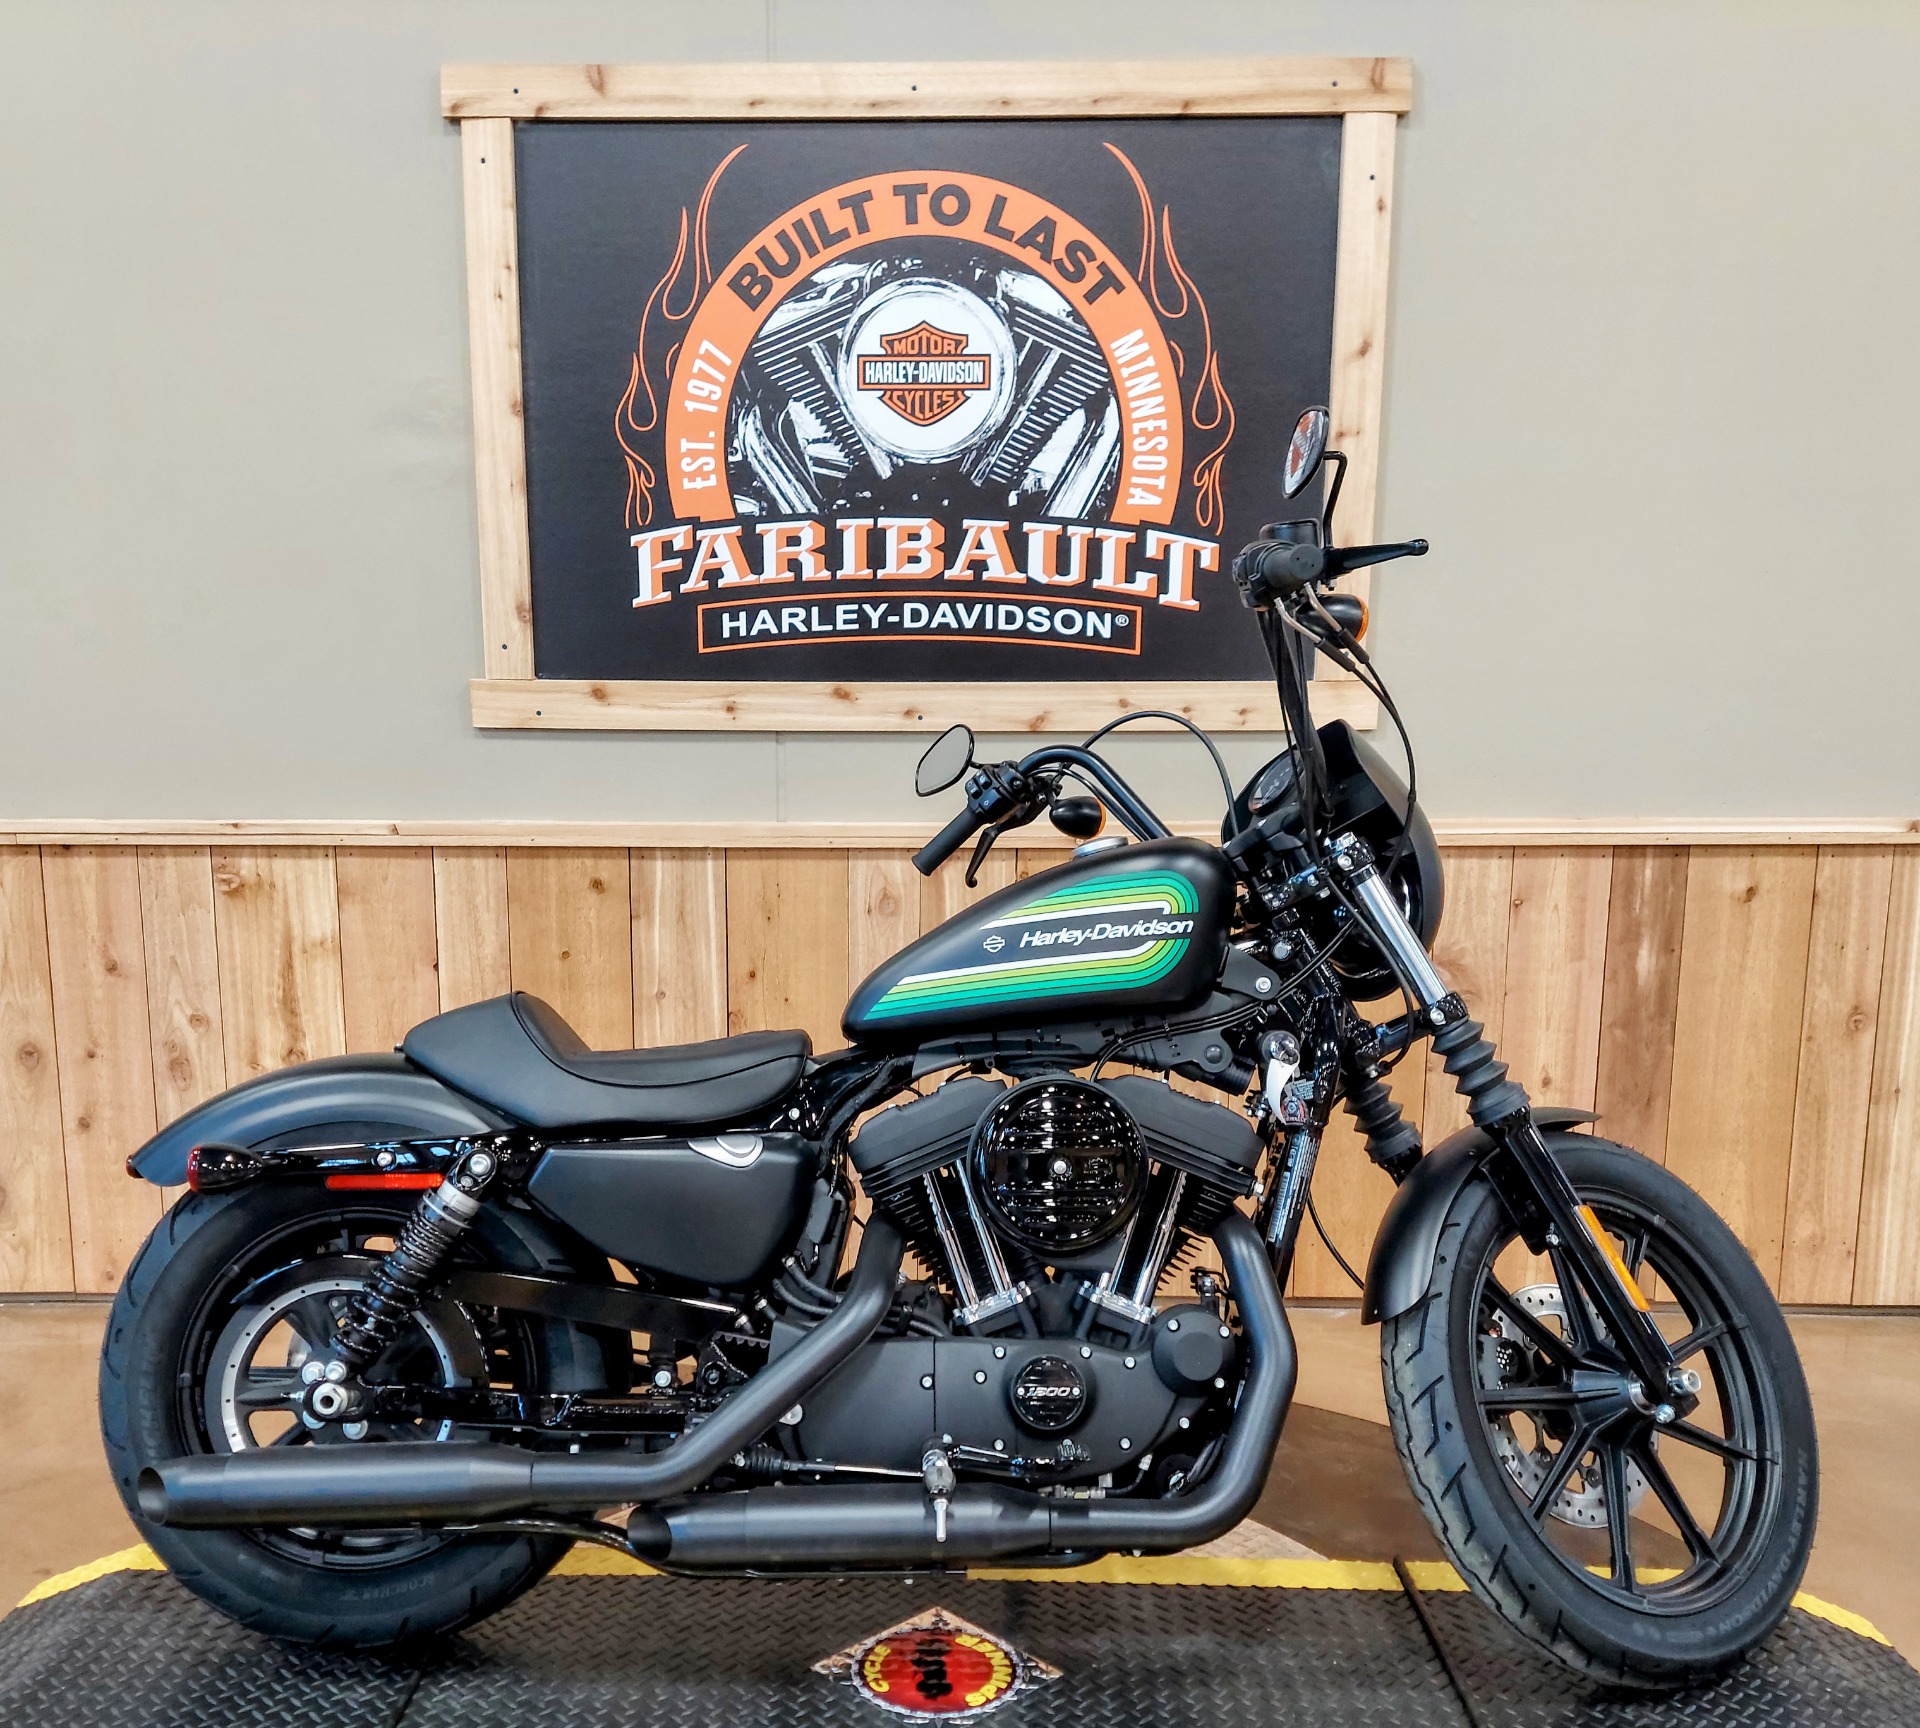 New 2021 Harley Davidson Iron 1200 Motorcycles In Faribault Mn Xl400656 Black Denim